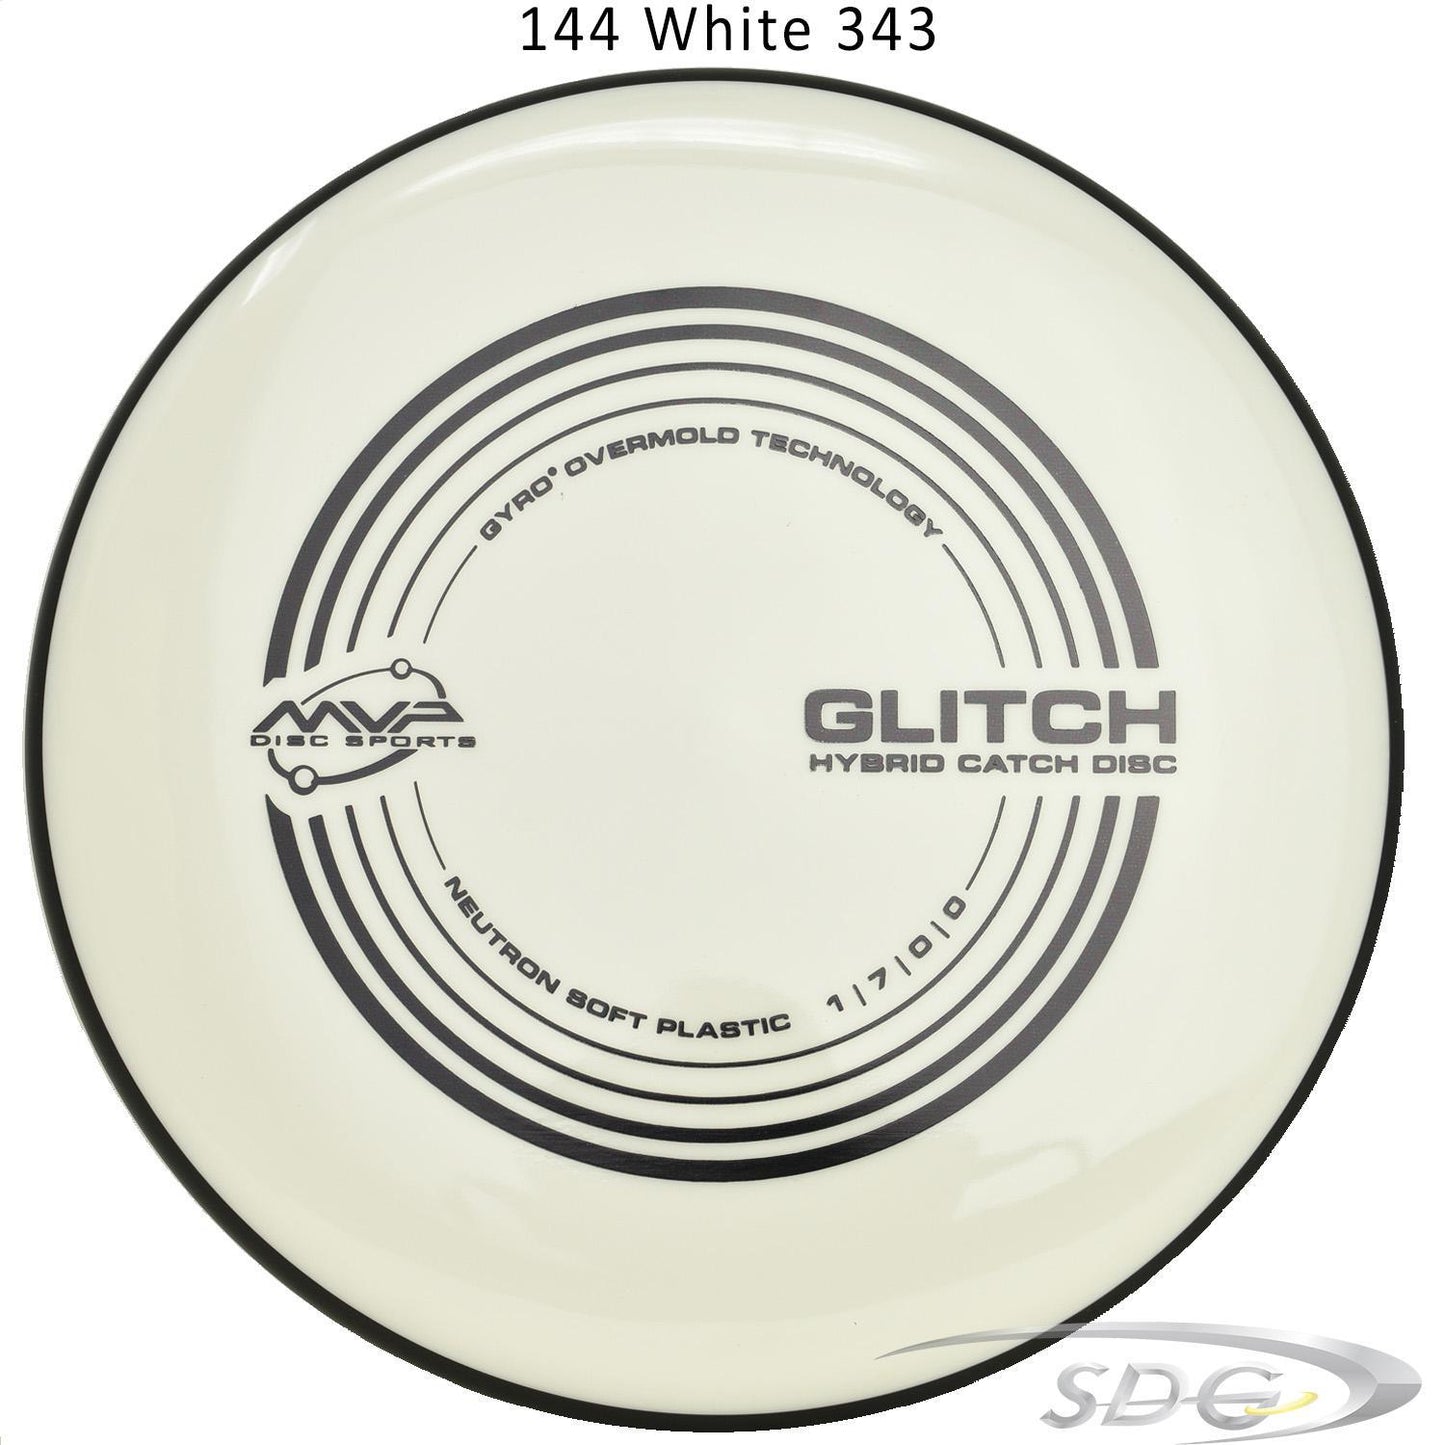 mvp-neutron-glitch-soft-hybrid-disc-golf-putt-approach-144-140-weights 144 White 343 